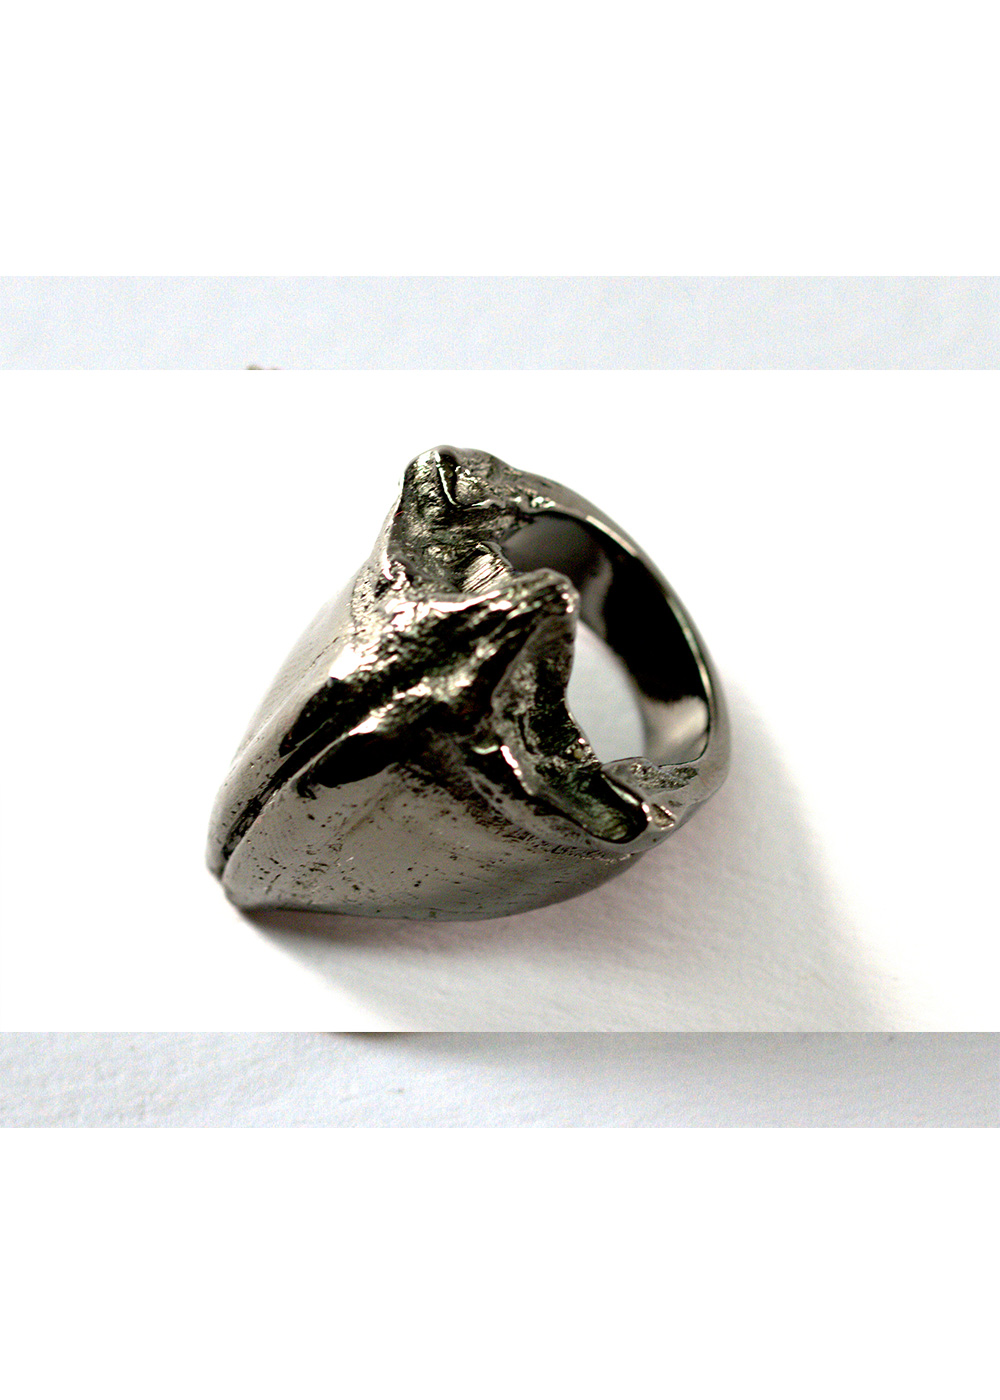 mandible ring, black rhodanized